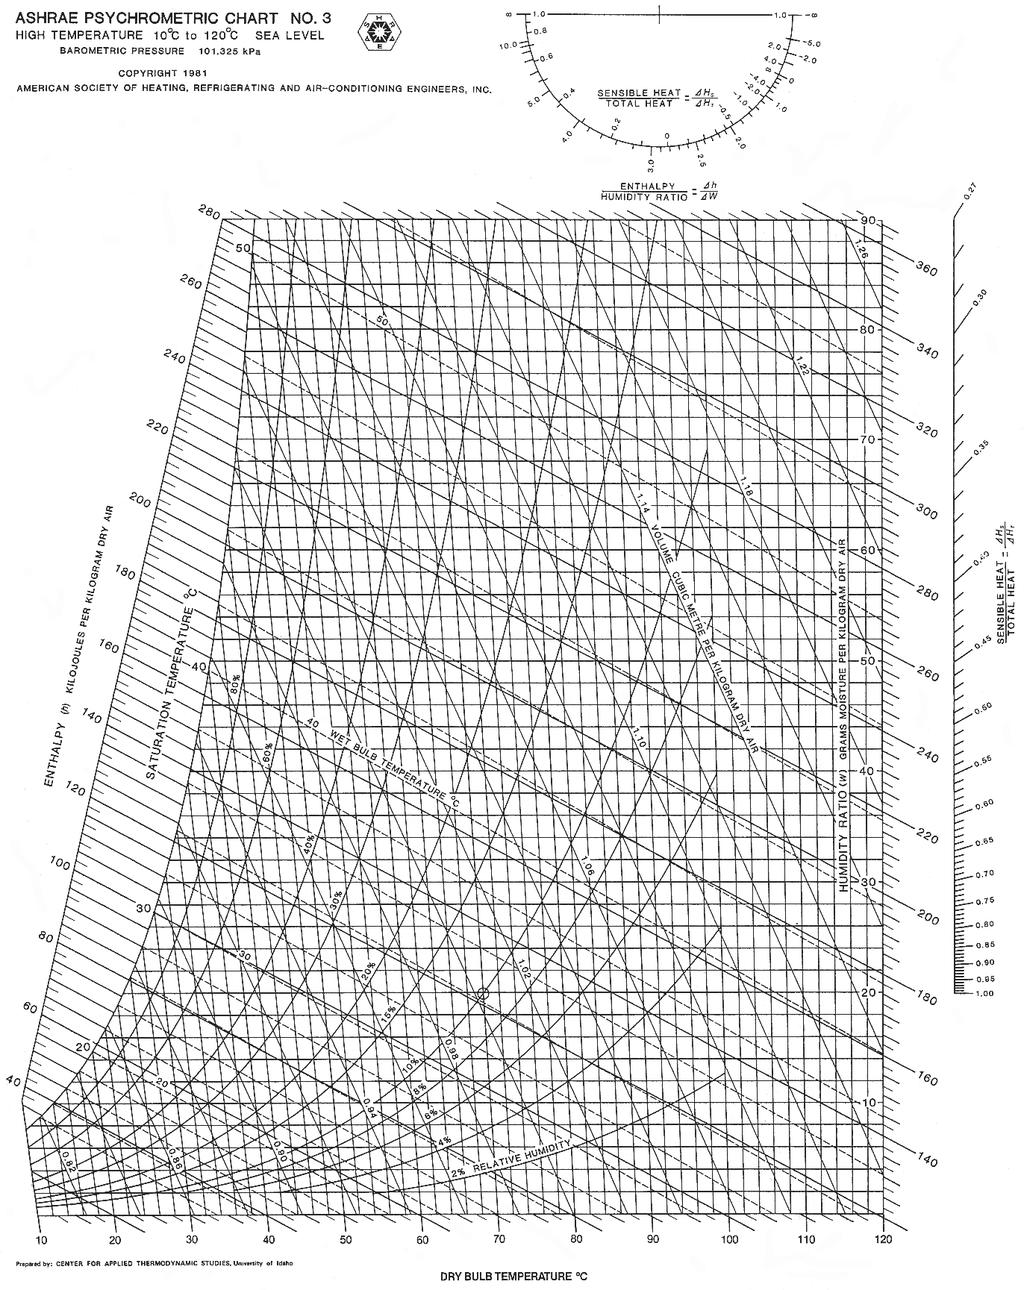 Capter 9 Pycrometric 221 Figure 9.03. Pycrometric cart for ig temperature (SI unit).